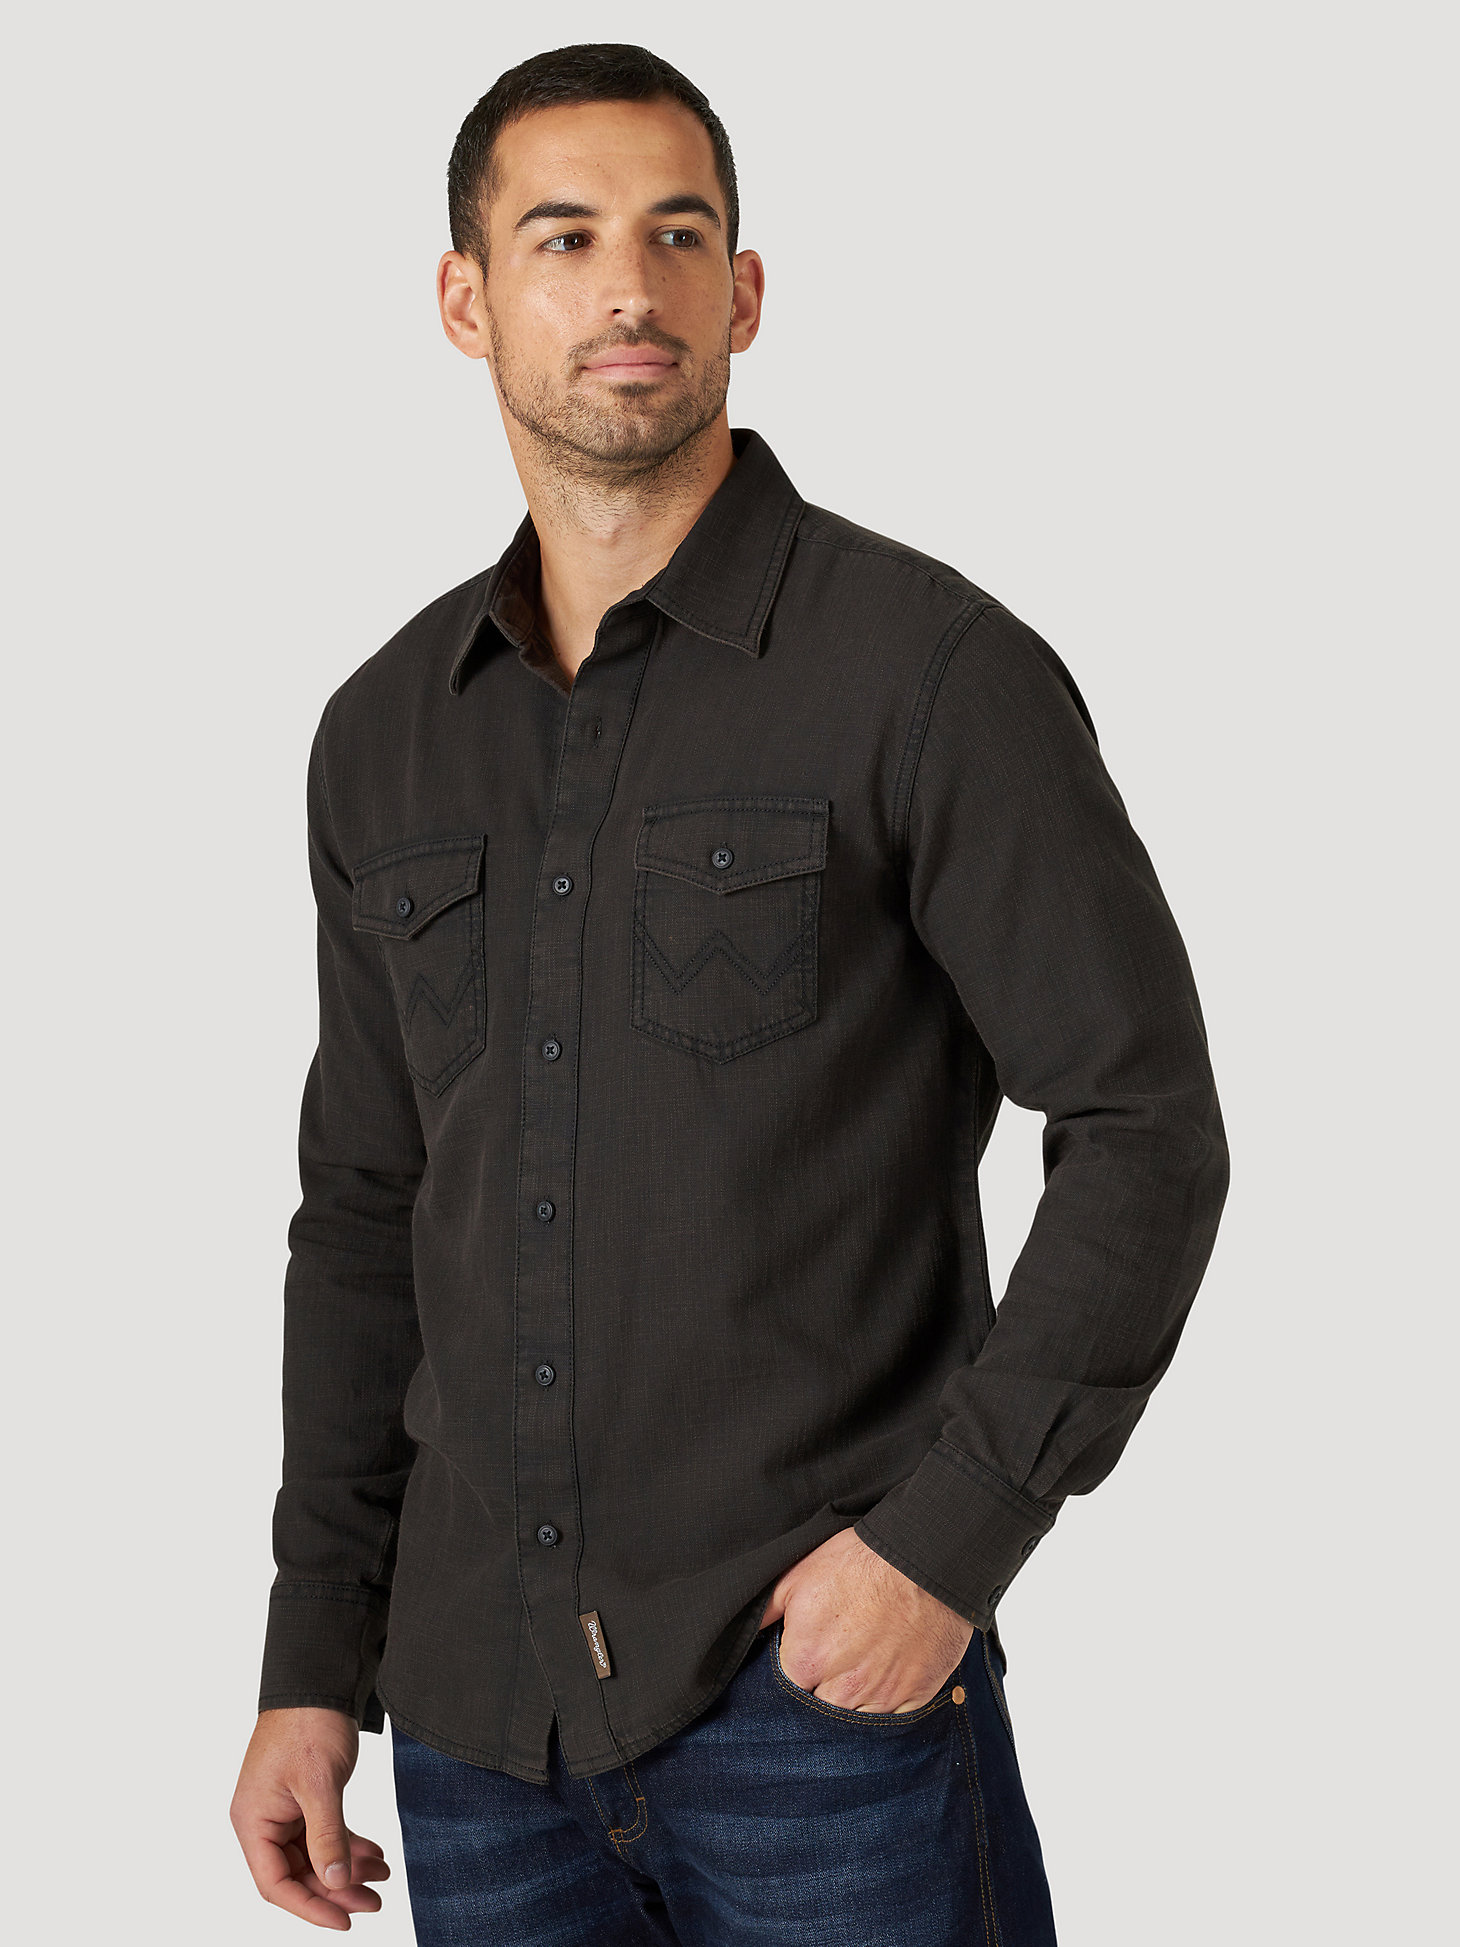 Men's Wrangler Retro® Premium Long Sleeve Button-Down Solid Shirt in Moonless Night alternative view 1